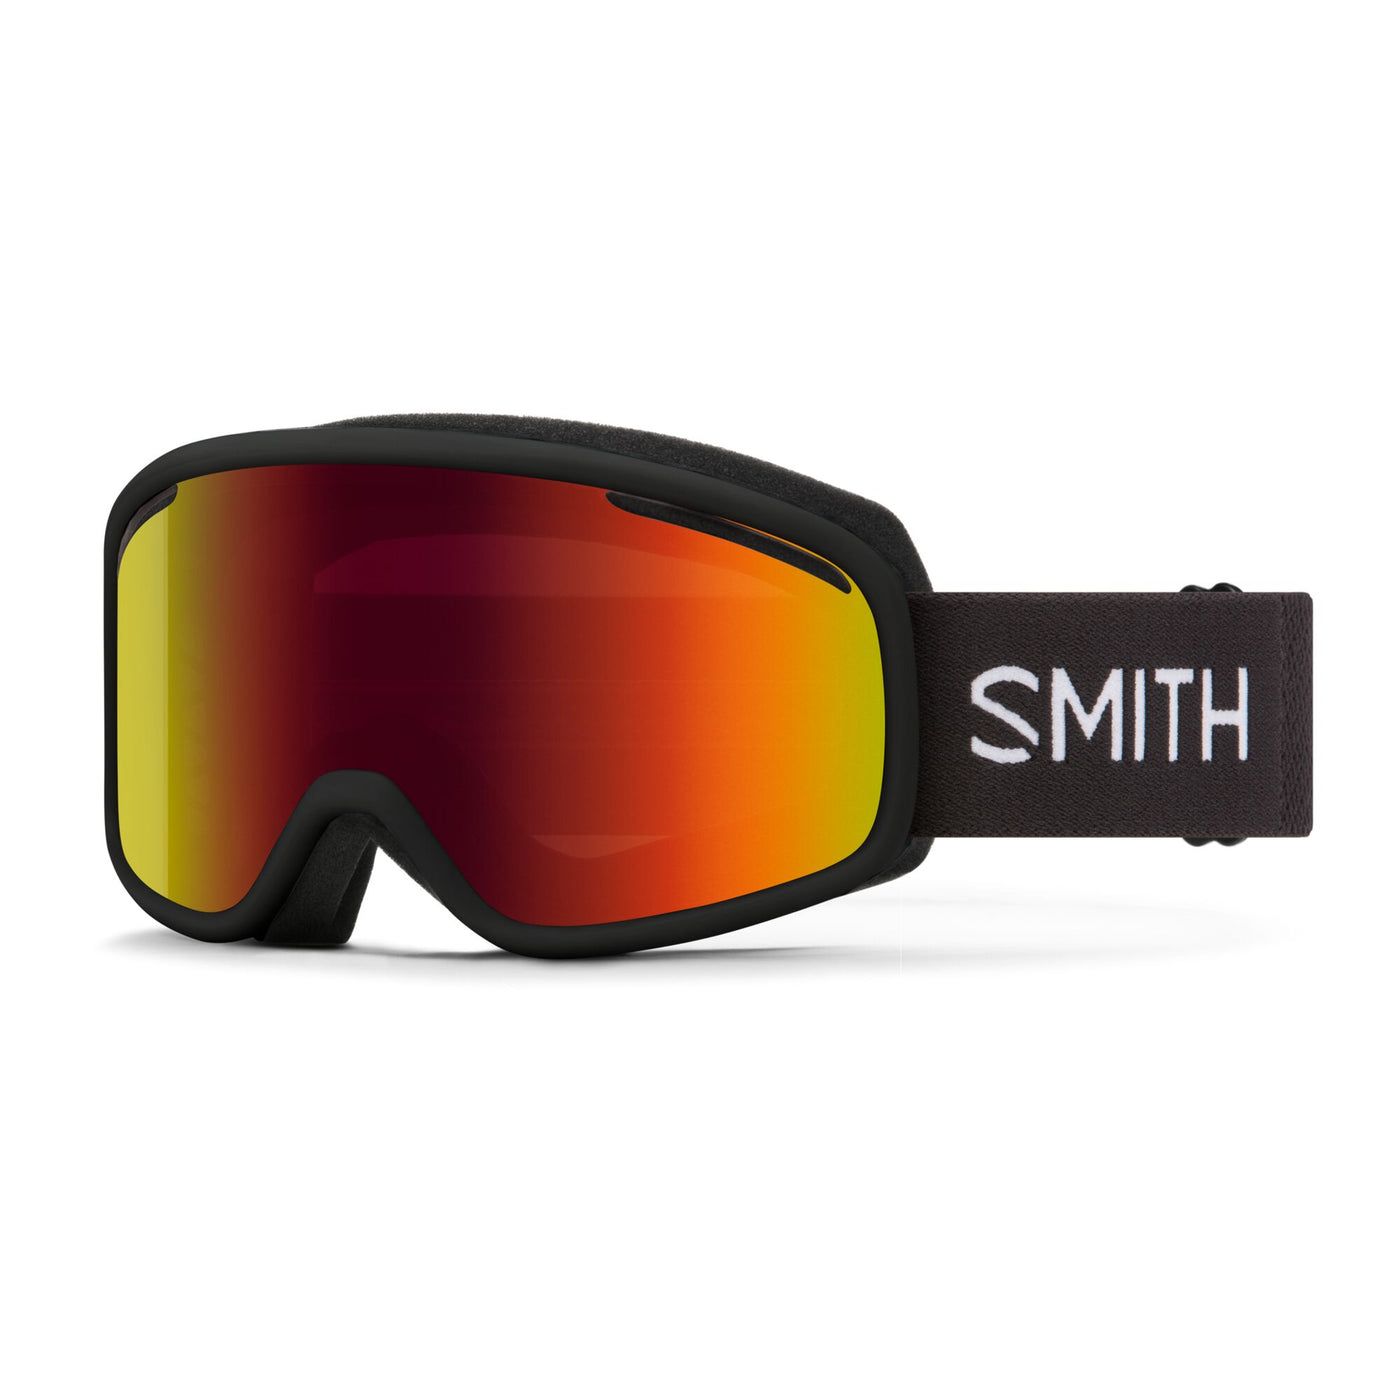 Smith 24 Vogue - Black - Red Sol-X Mirror